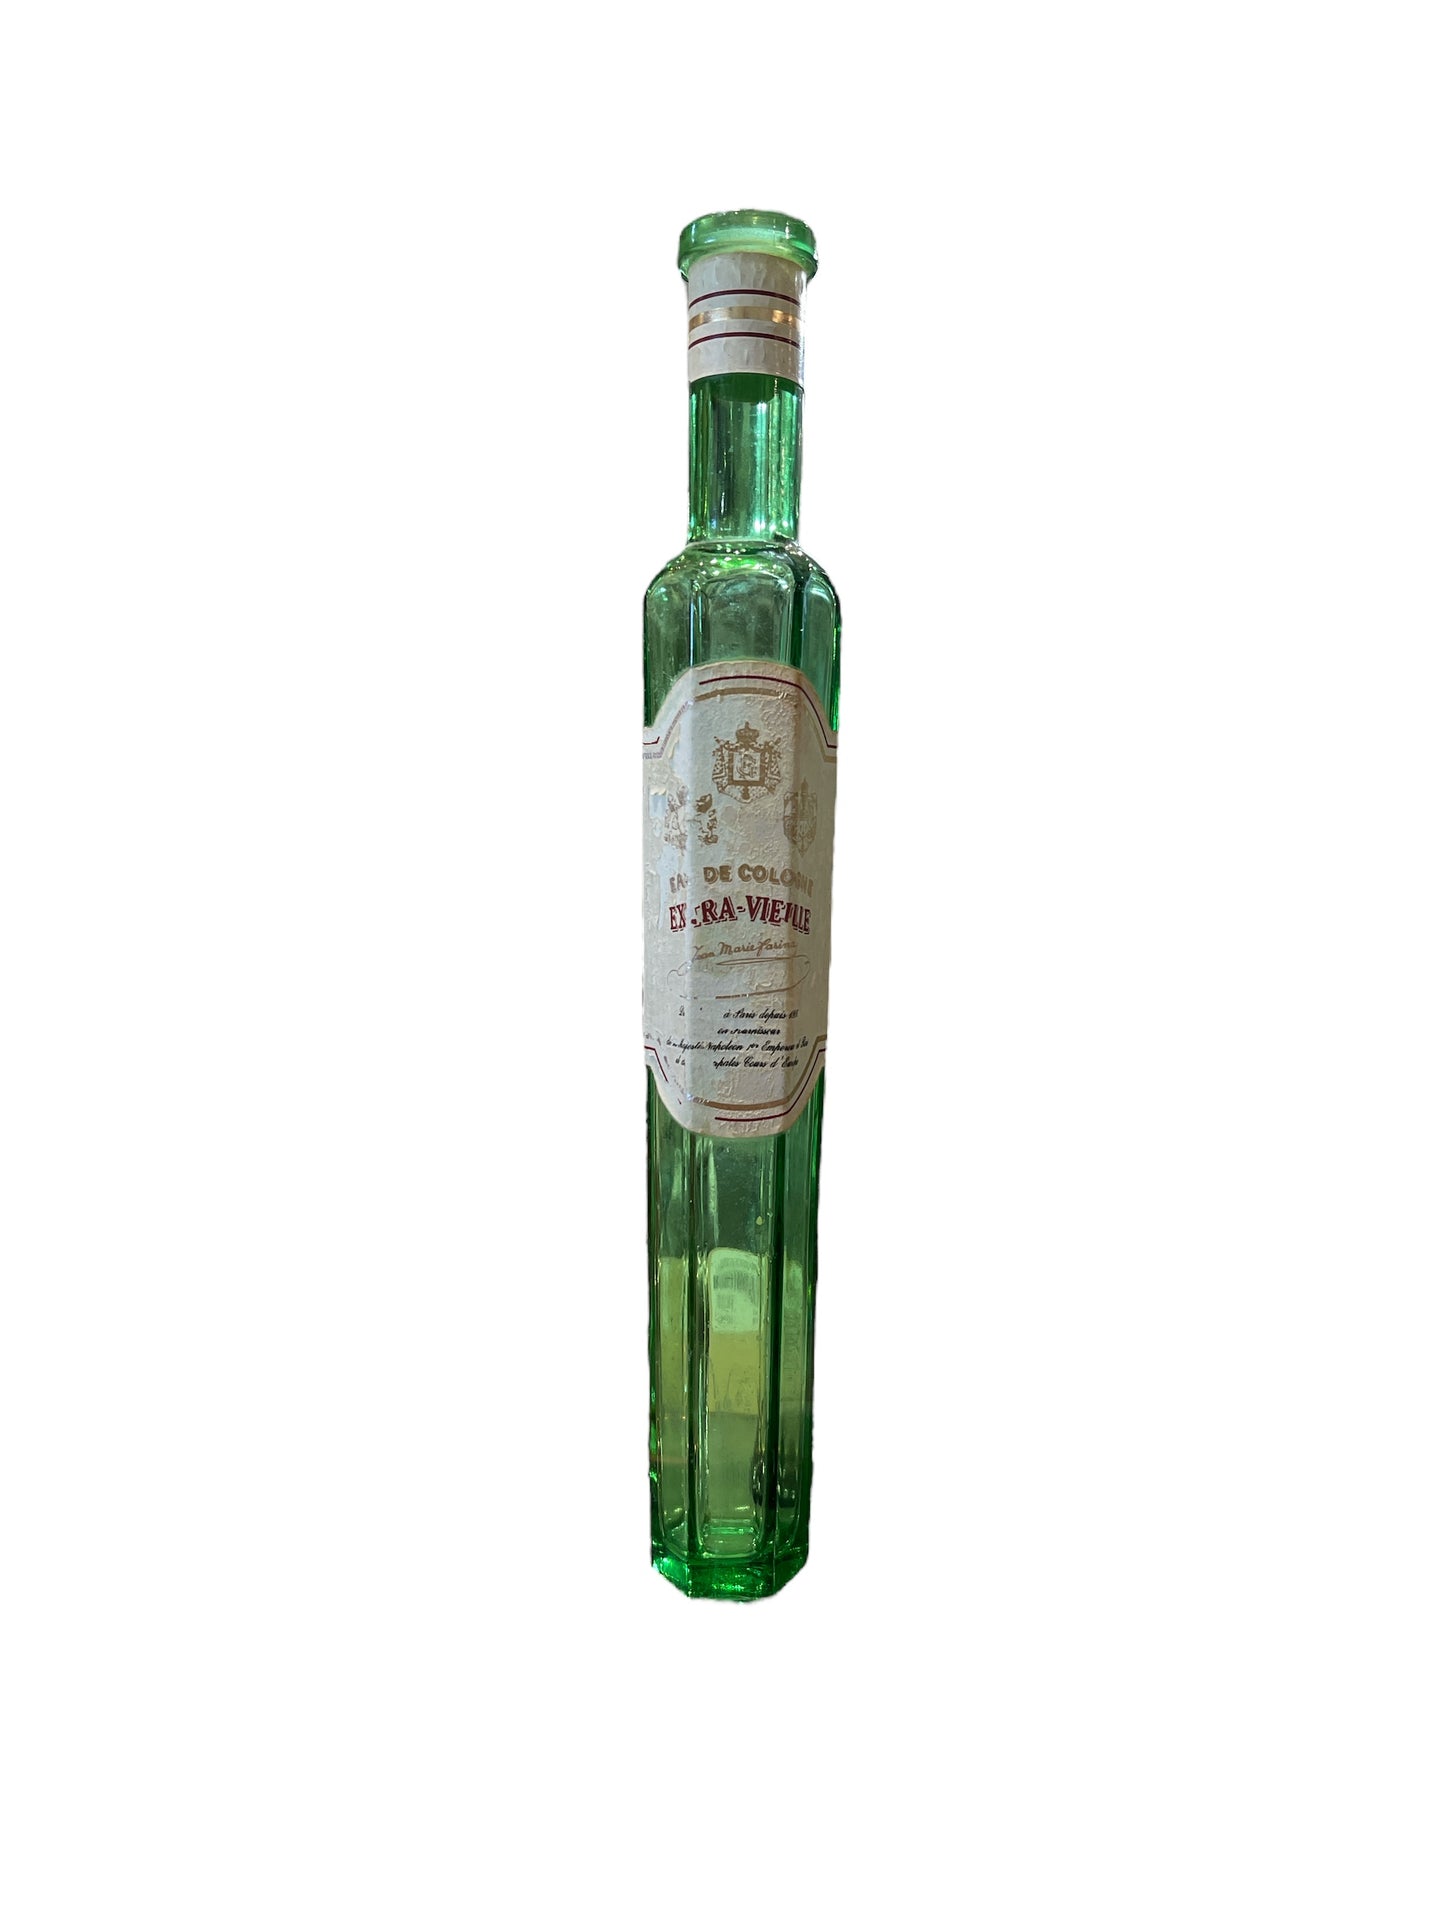 Green Decorative Bottle